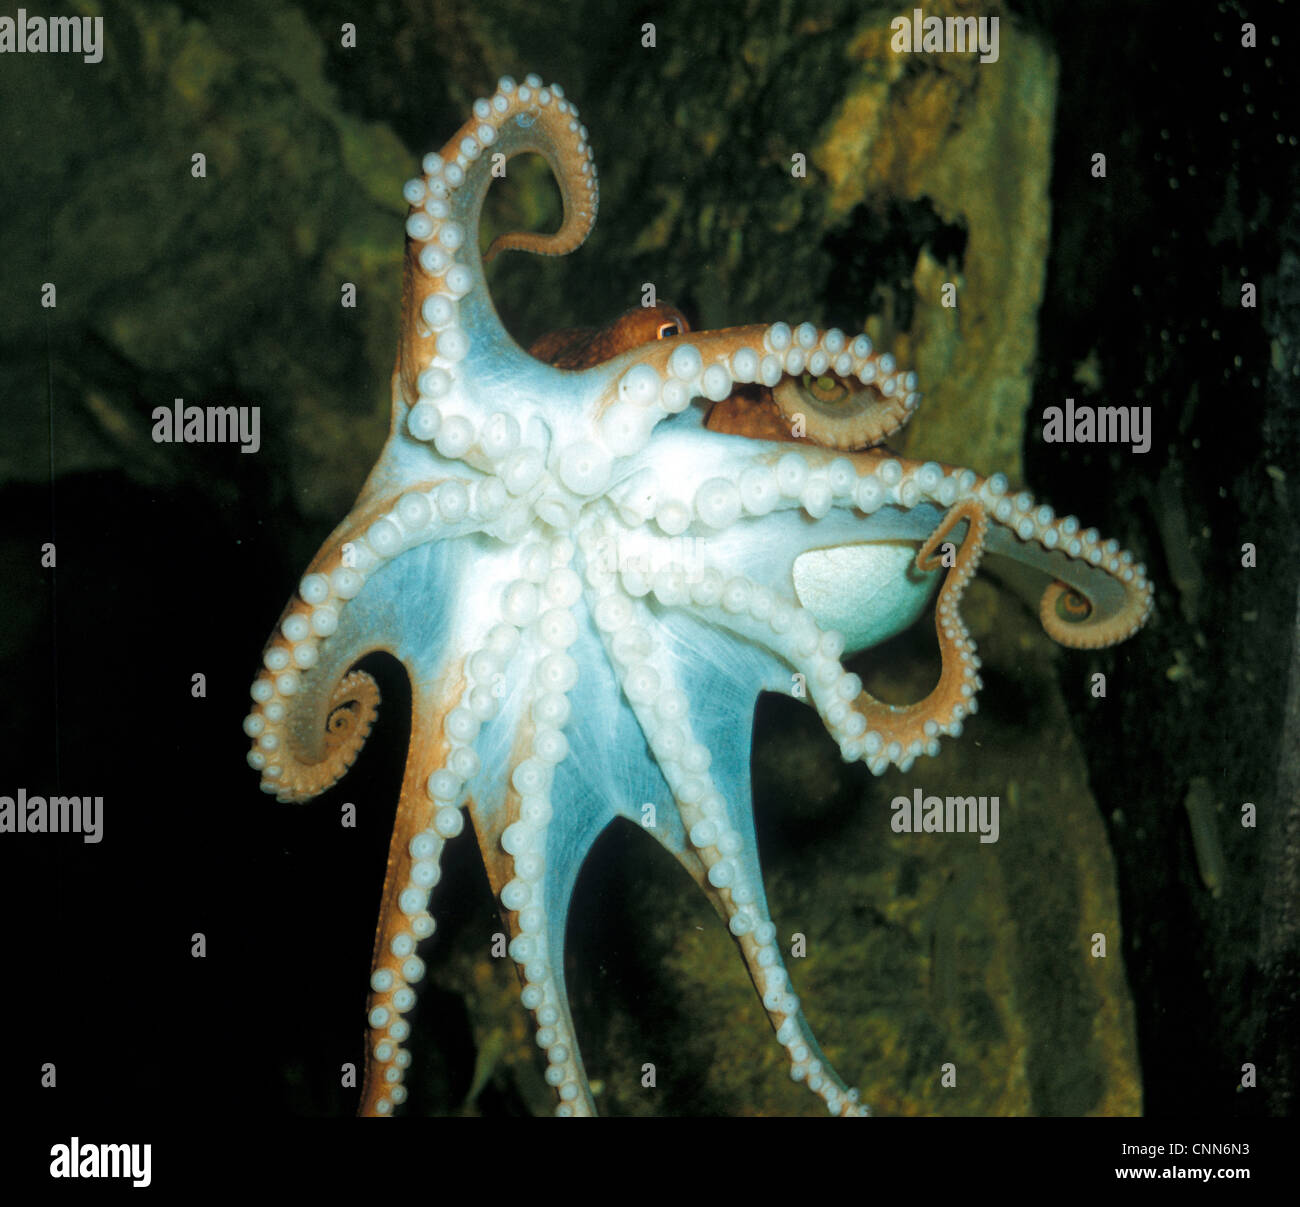 Lesser Octopus (Eledone cirrhosa) Clinging to aquarium glass / showing Stock Photo